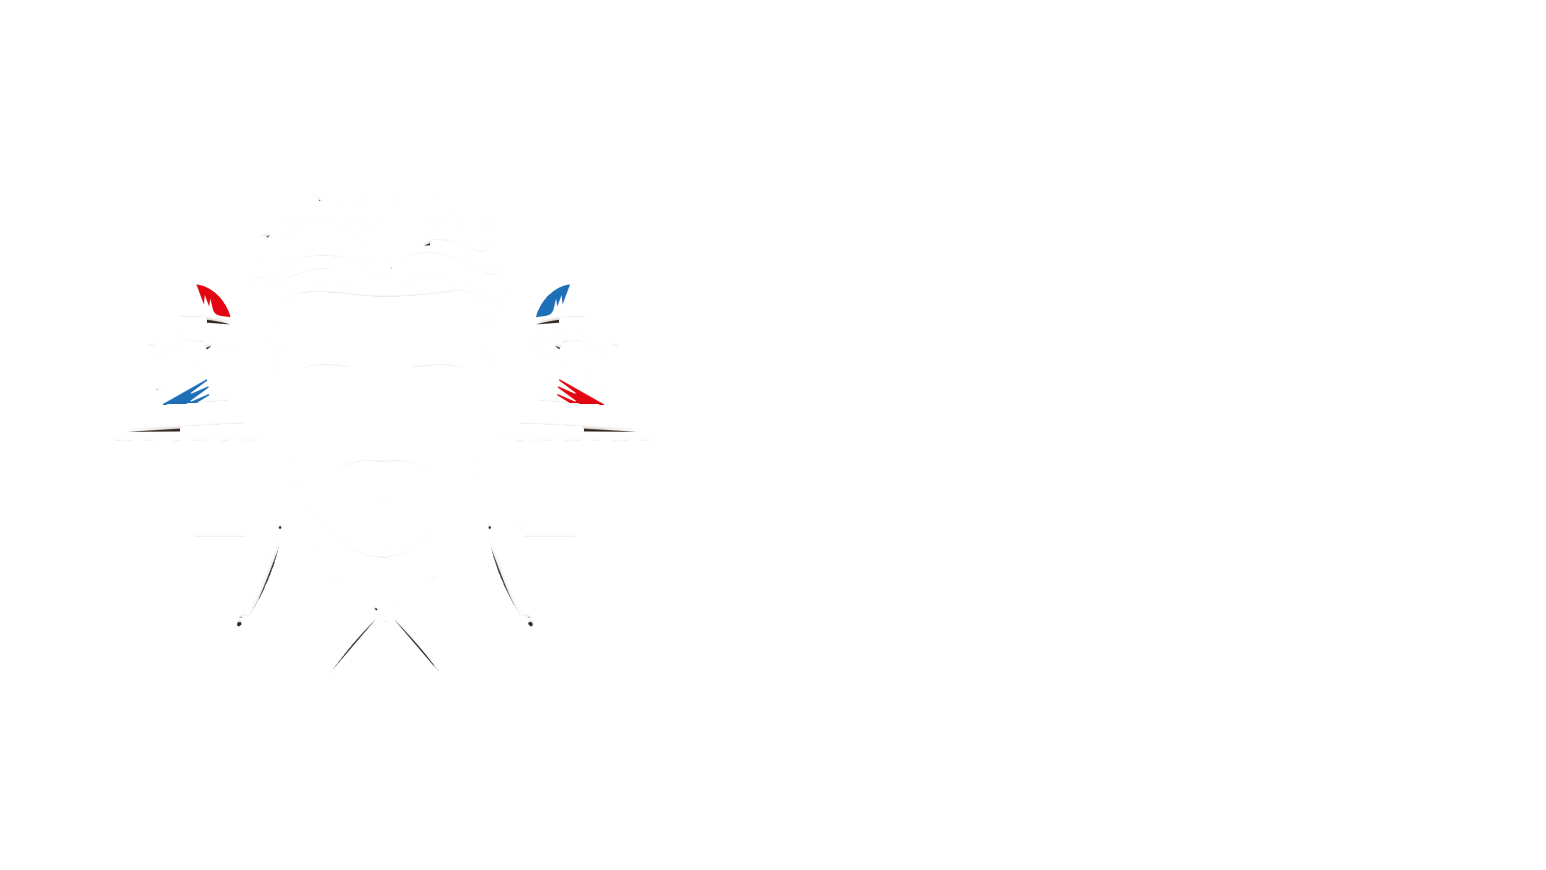 Barbersalon Rosmalen